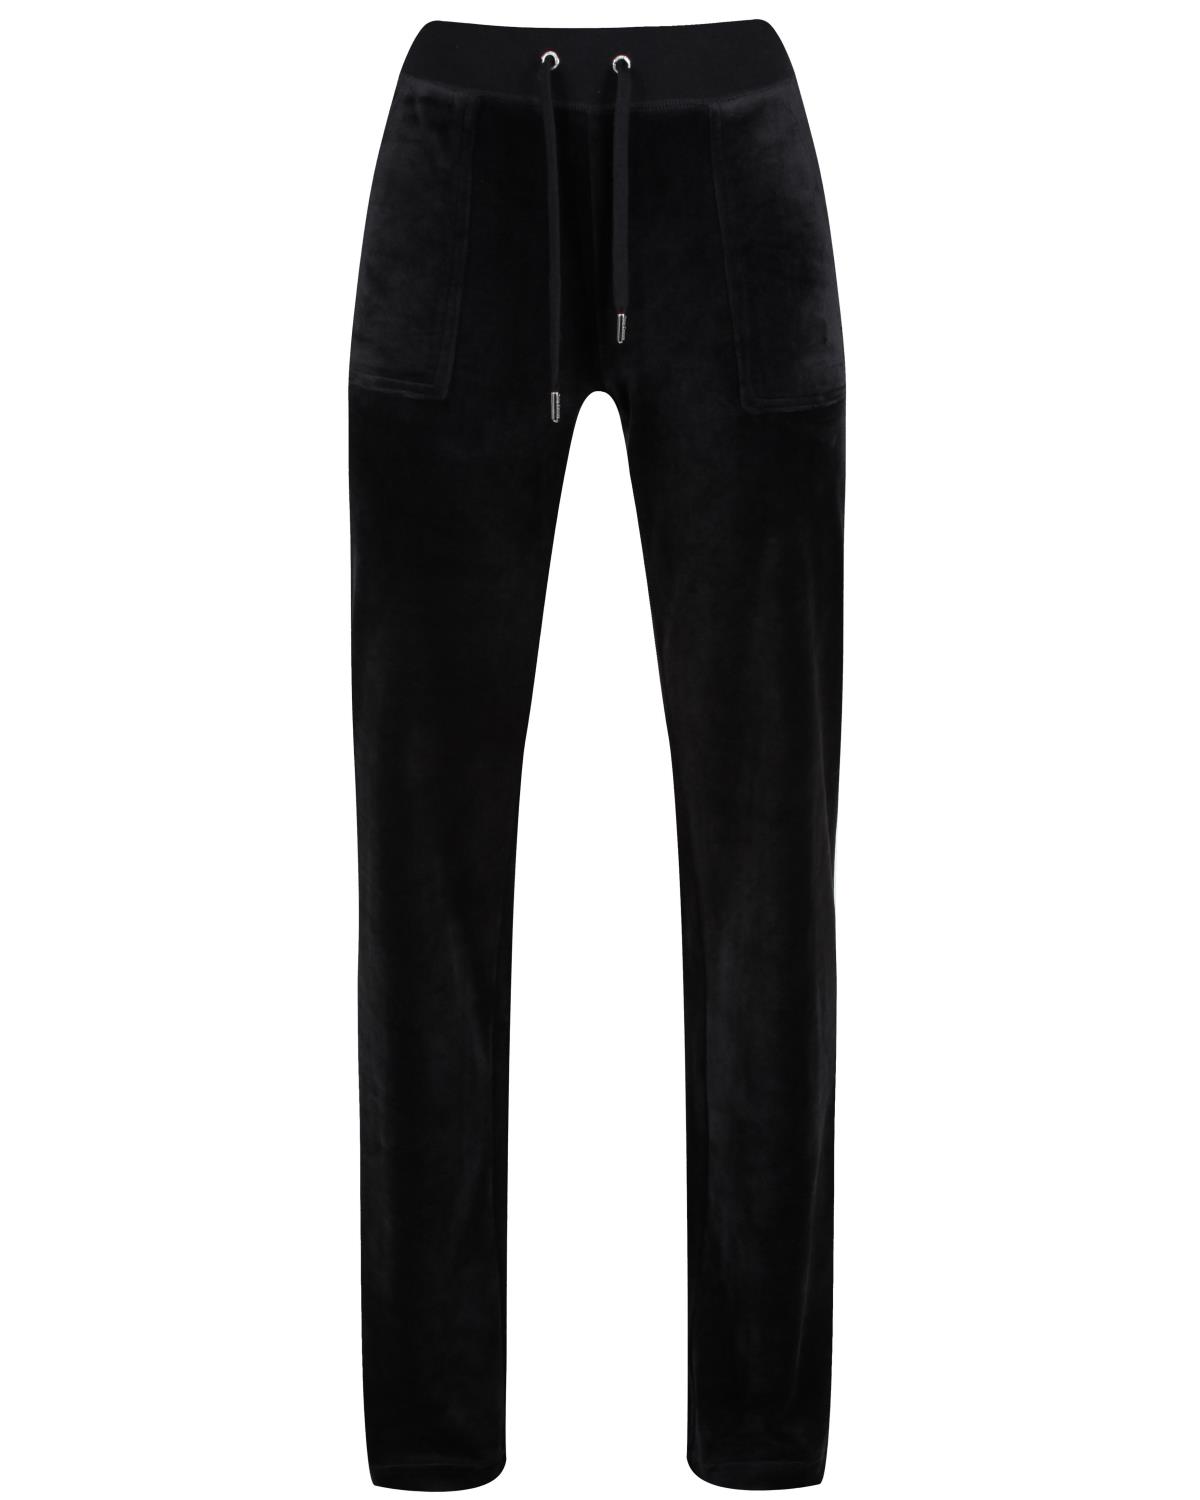 Del Ray Classic velour pant pocket design black - Juicy Couture